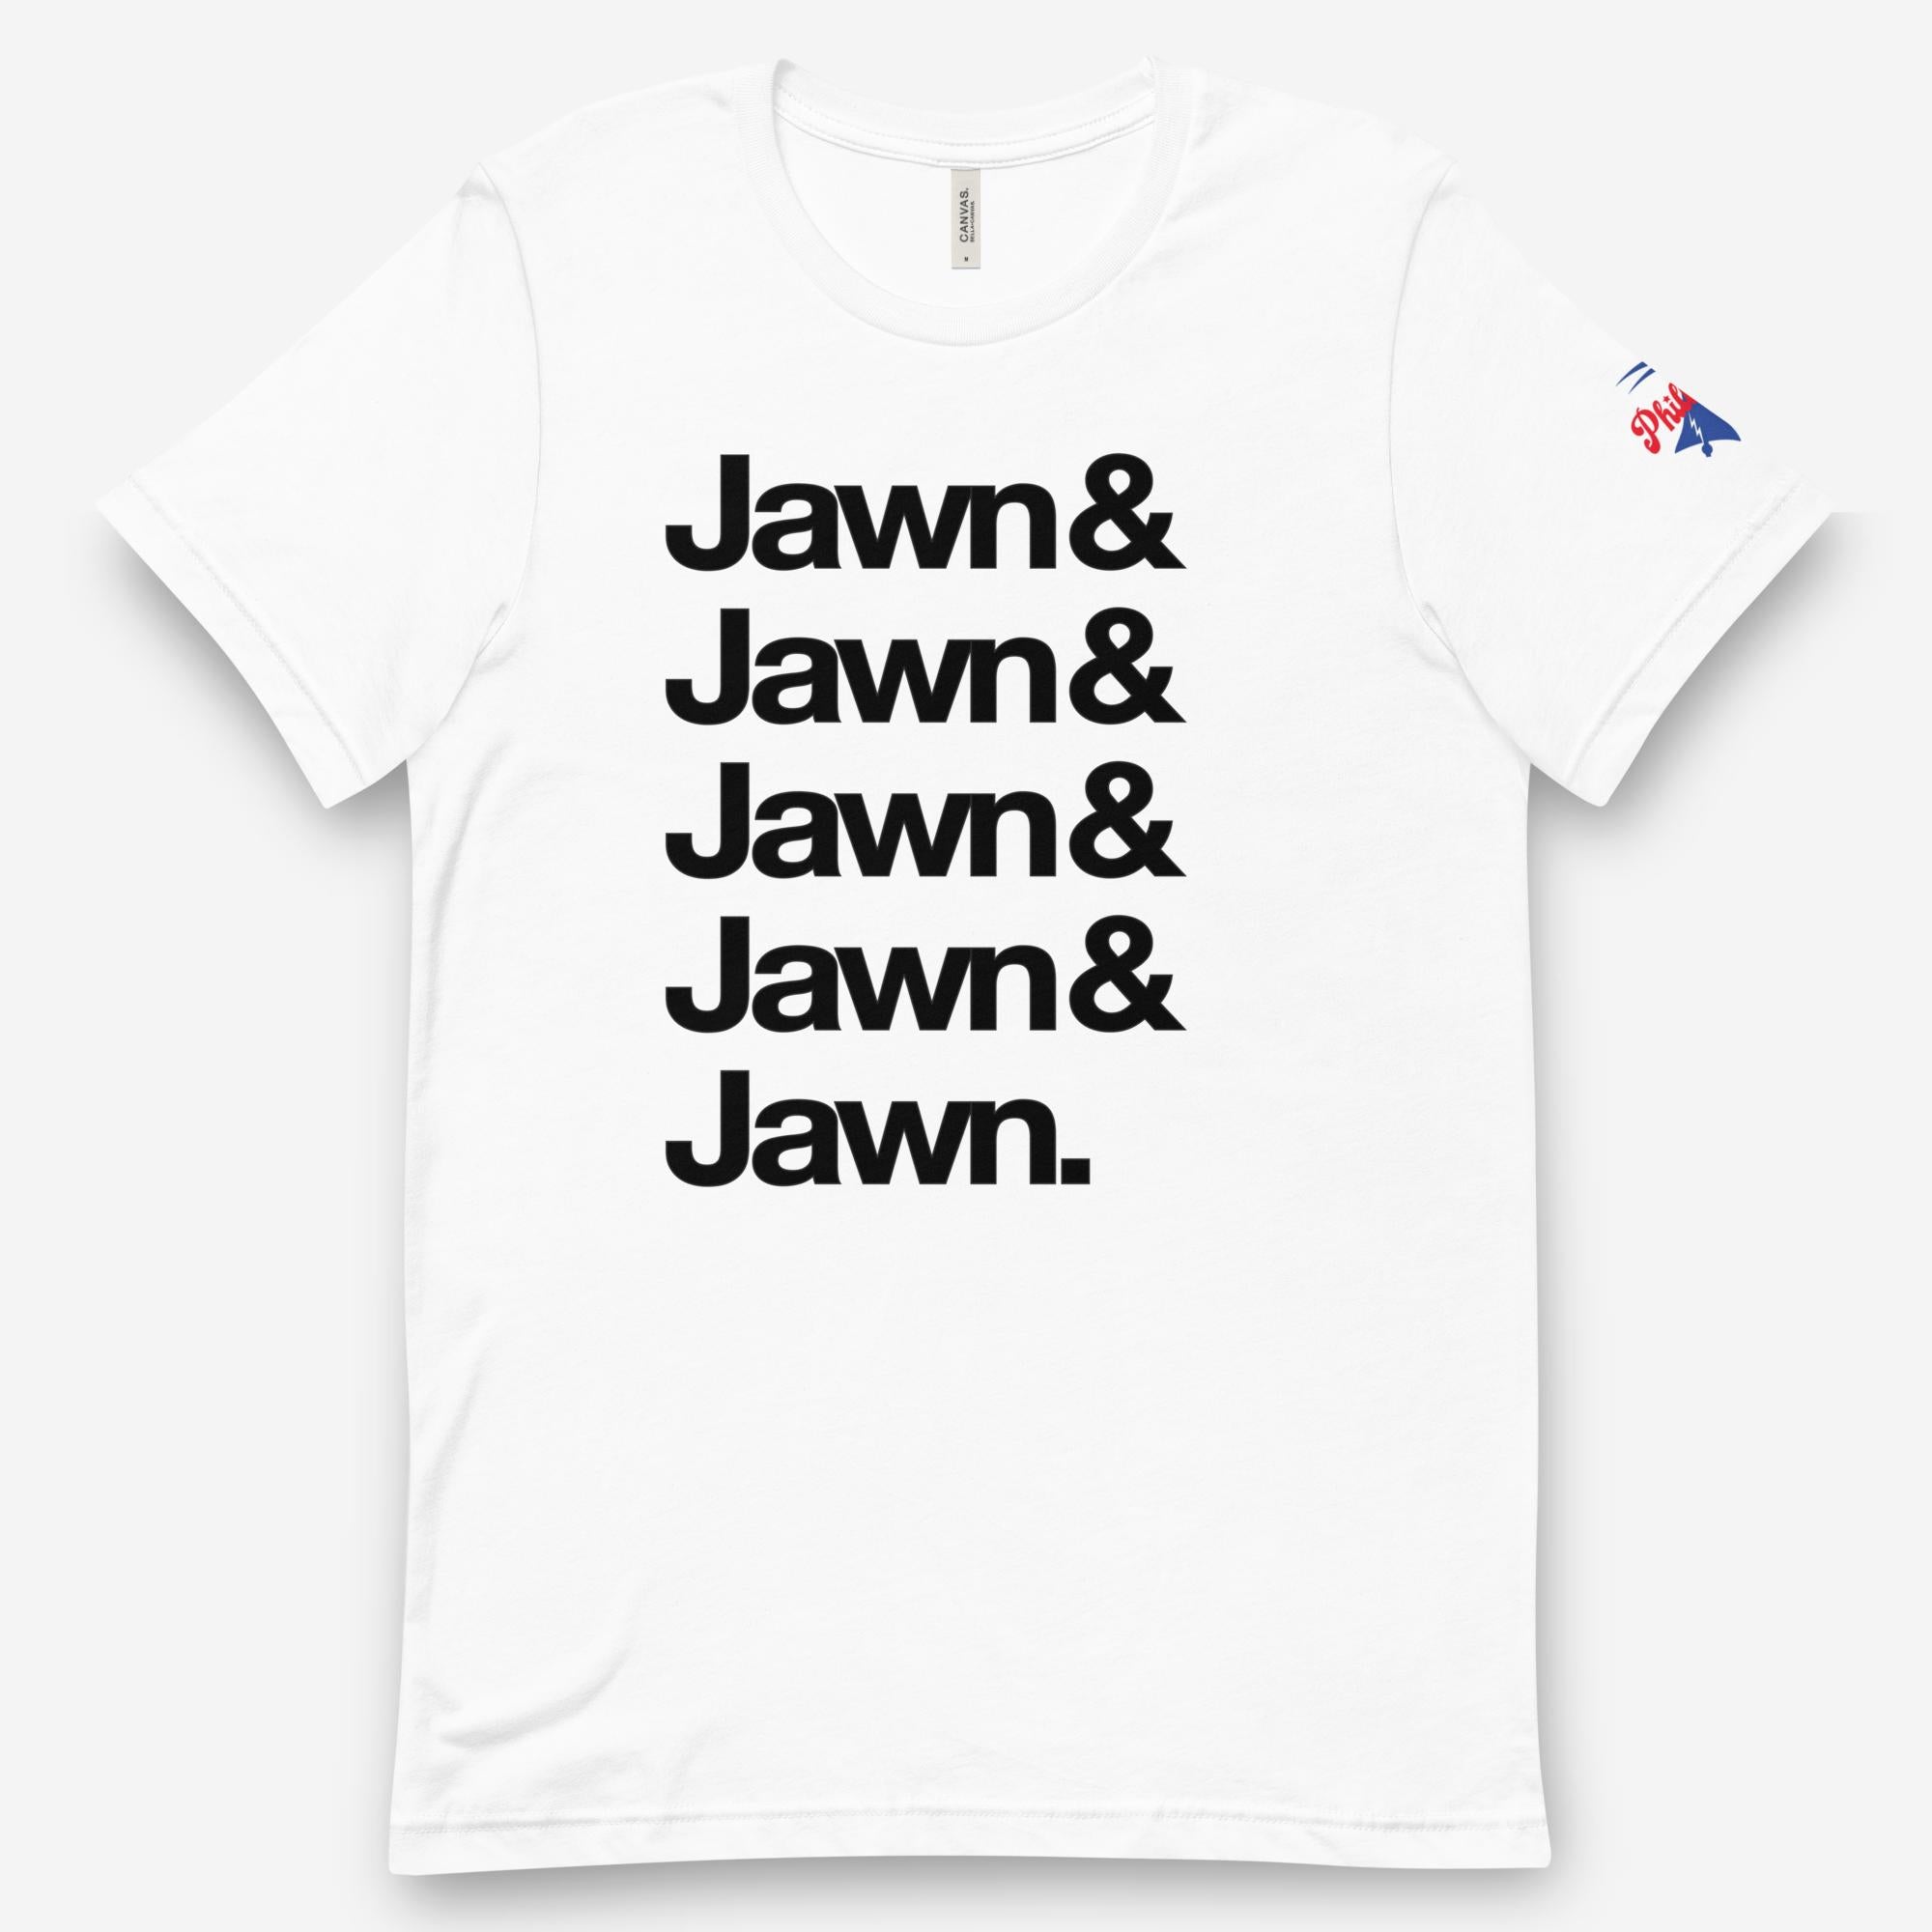 "Jawn & Jawn & Jawn & Jawn & Jawn" Tee